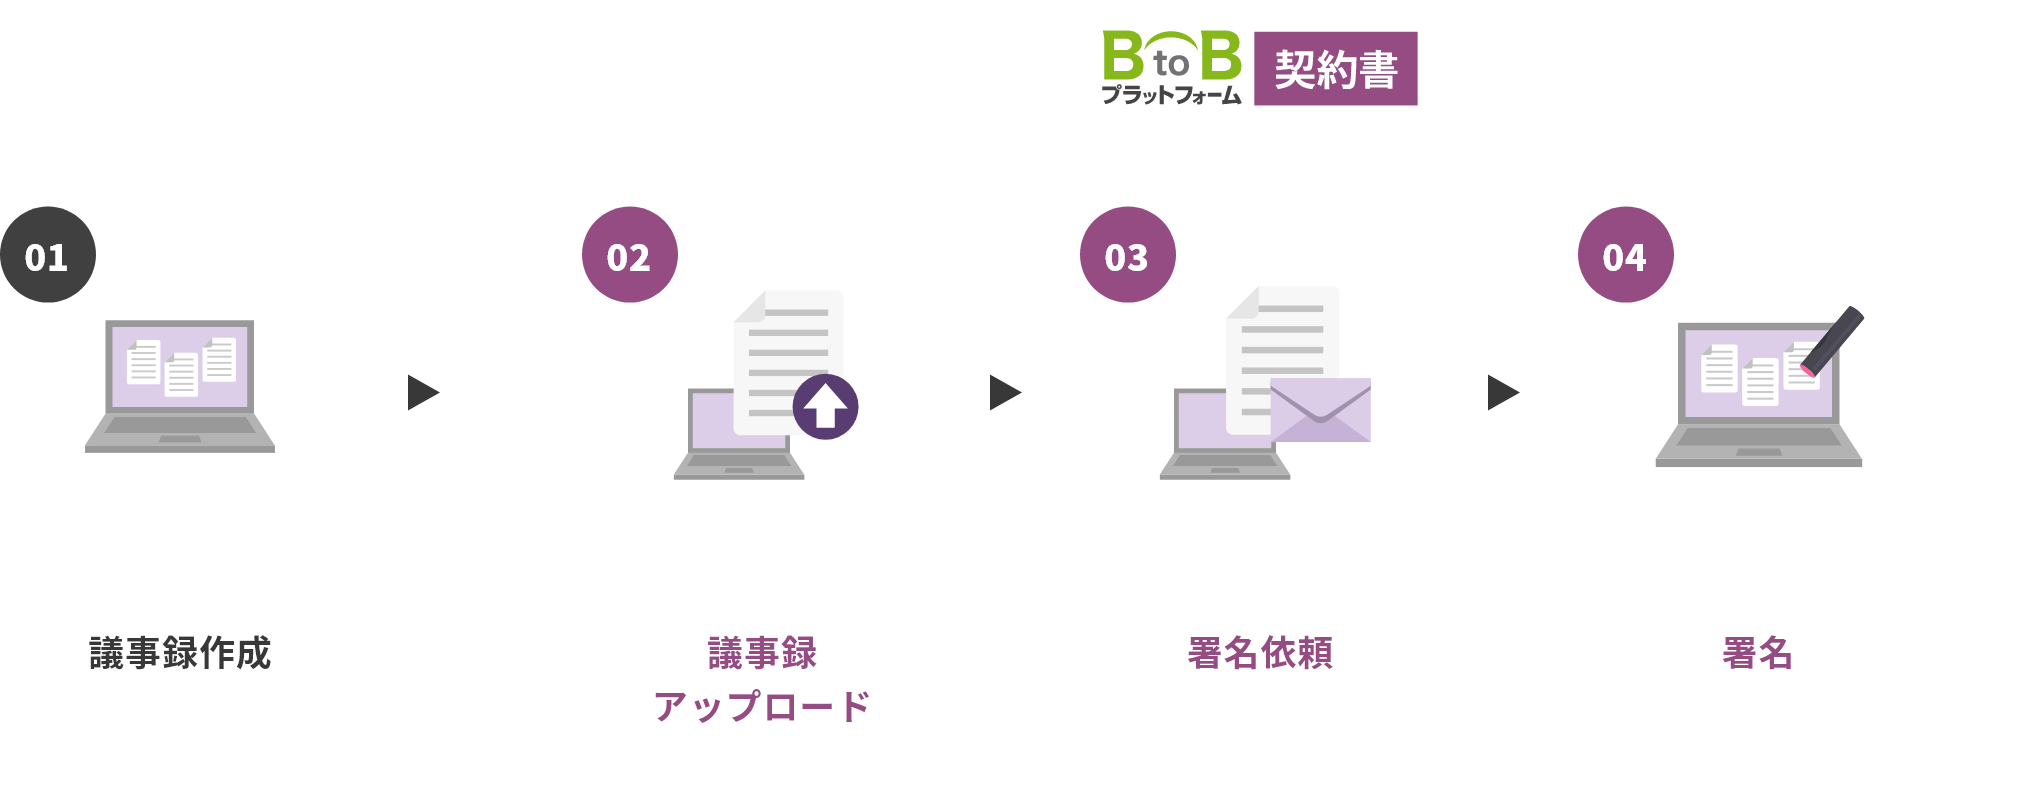 BtoBプラットフォーム契約書の社内文書署名機能は4ステップで電子署名が完了